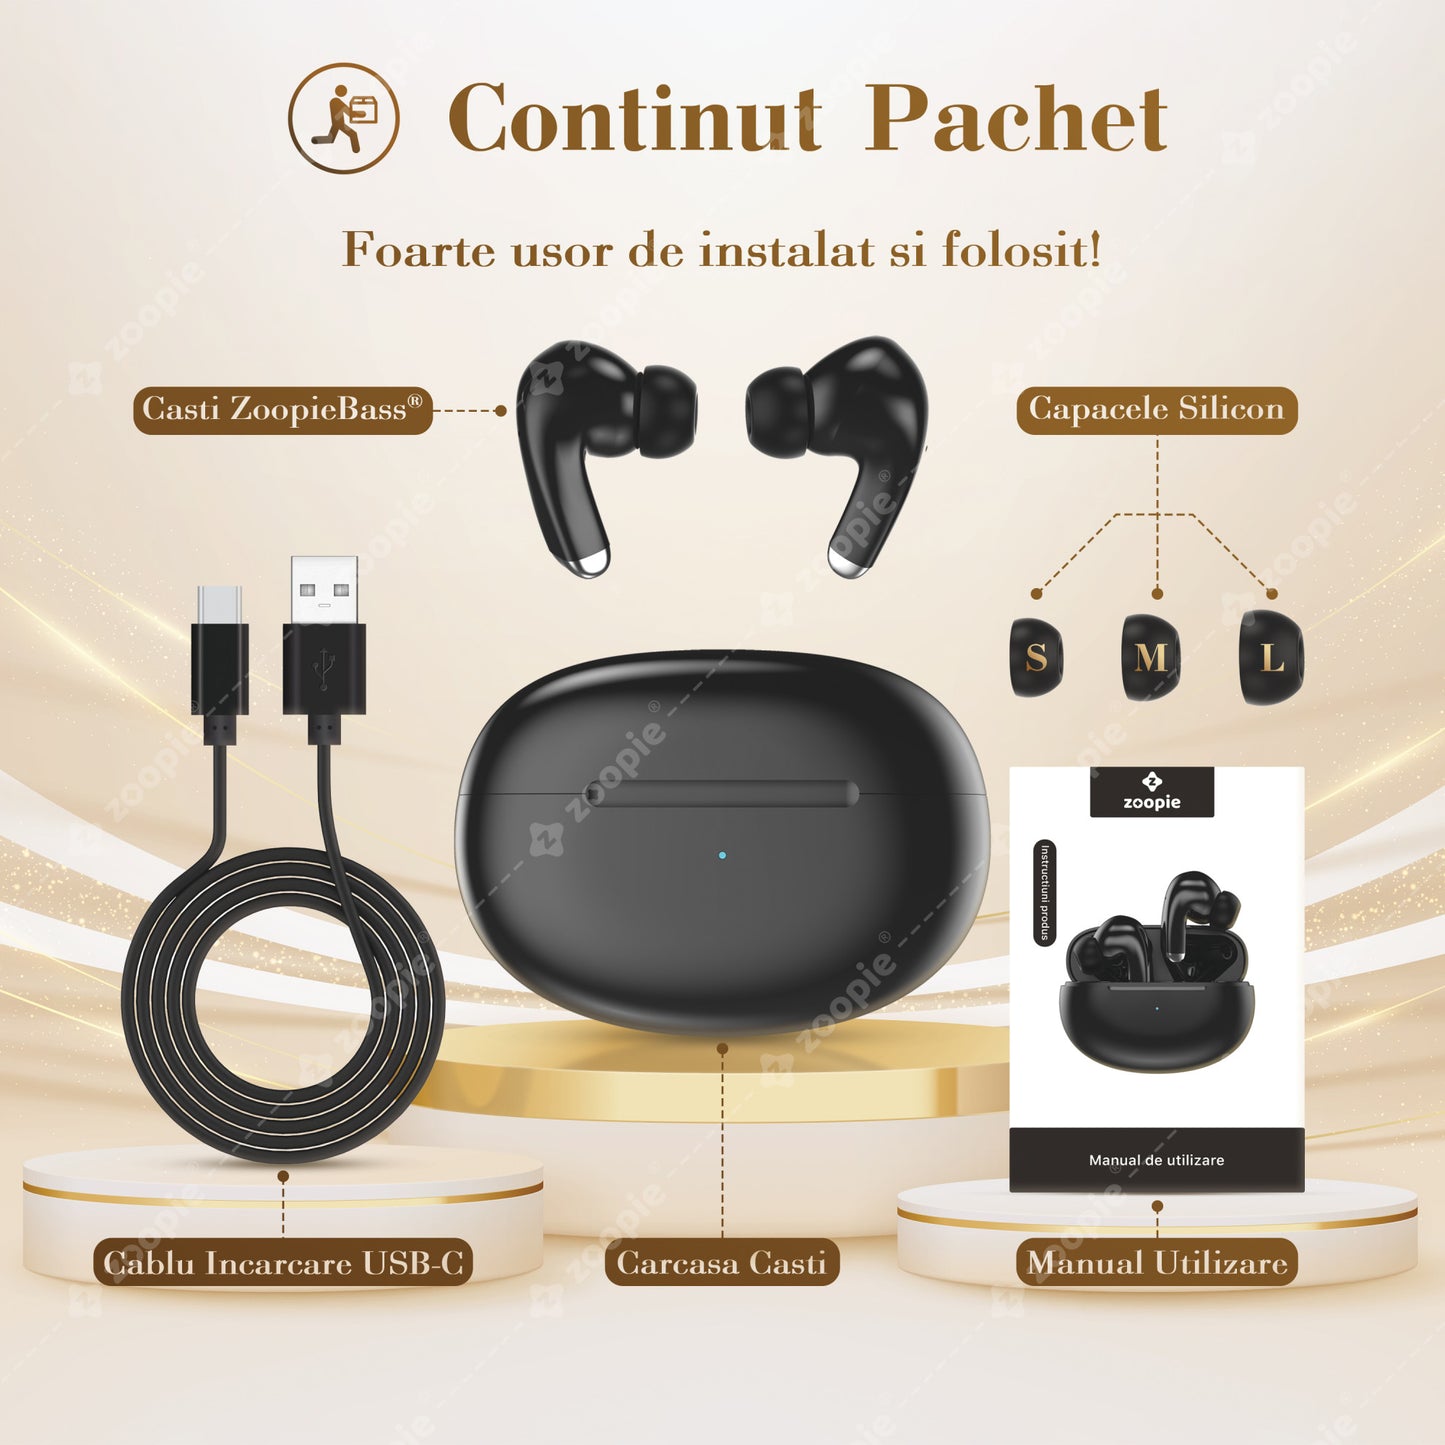 Casti Wireless Bluetooth, Zoopie®BASS negru continut pachet